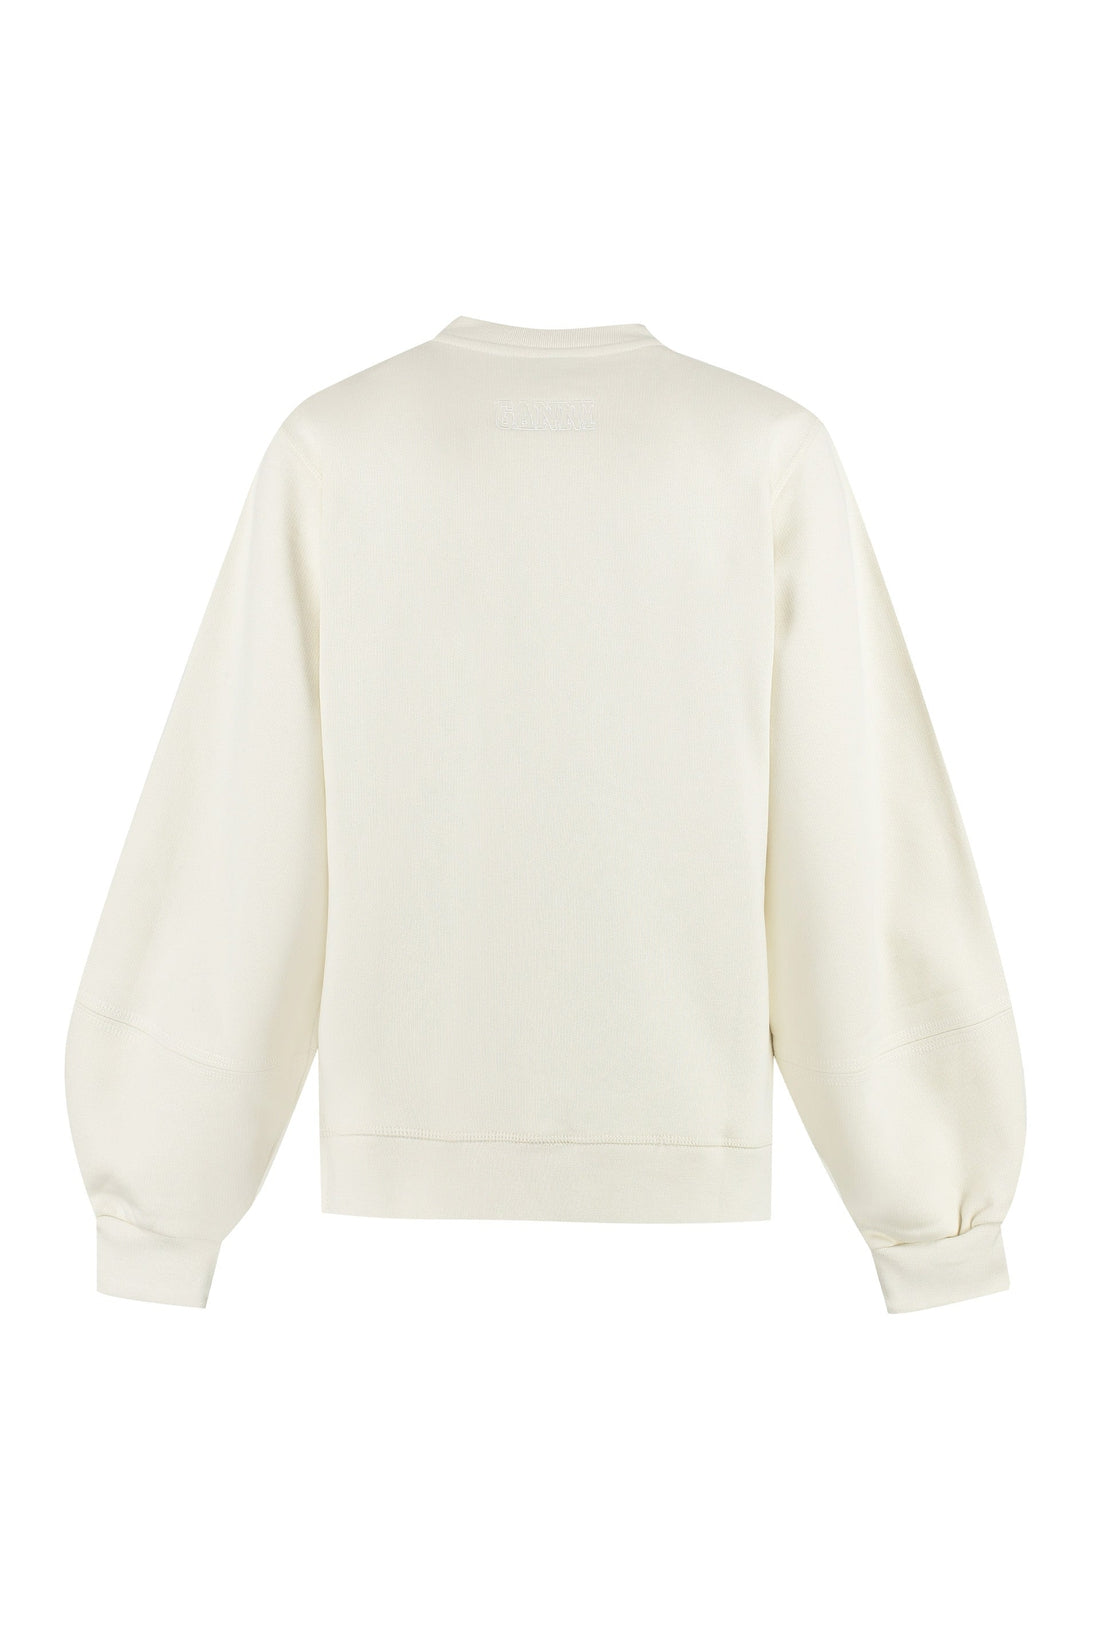 GANNI-OUTLET-SALE-Software Isoli cotton sweatshirt-ARCHIVIST